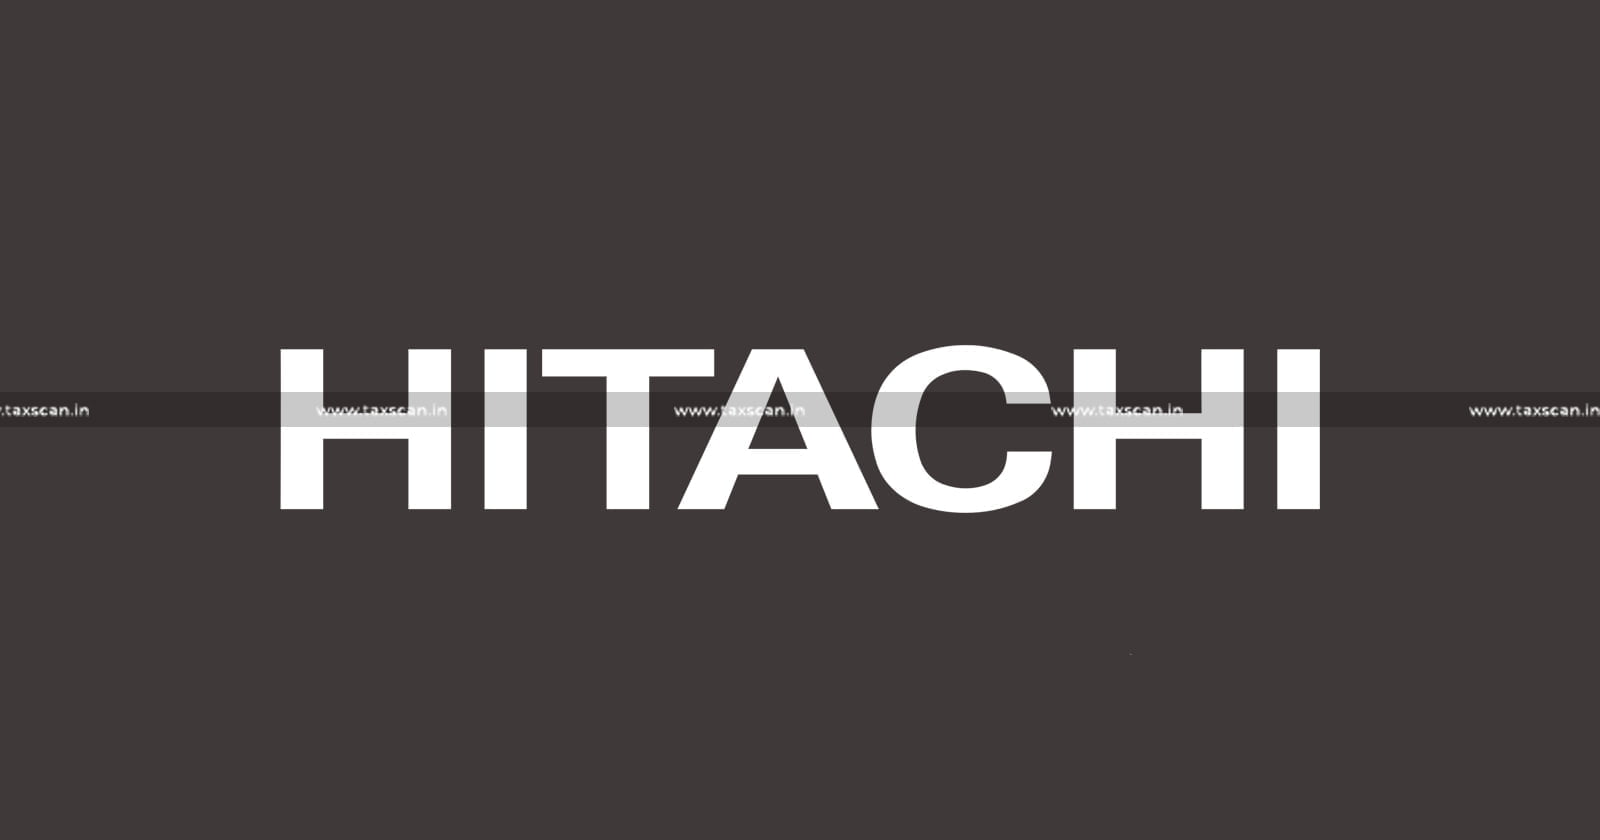 MBA Vacancy in Hitachi - CA Vacancy in Hitachi - CMA Vacancy in Hitachi - TAXSCAN